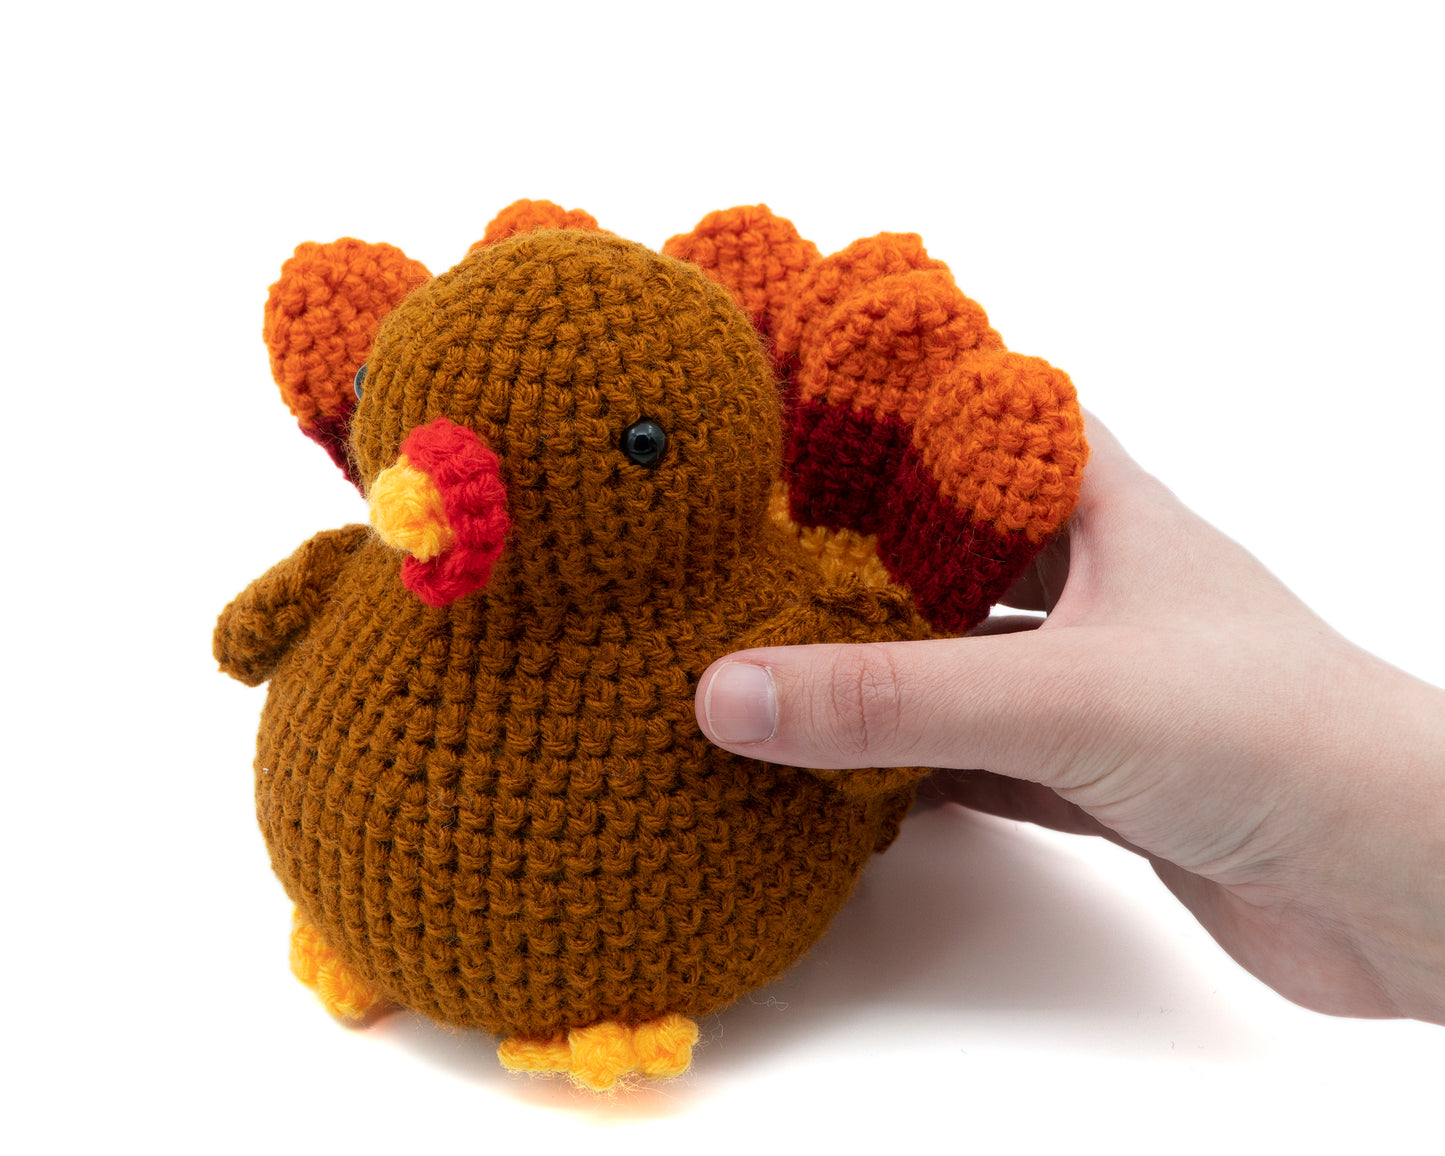 amigurumi crochet turkey pattern in hand for size comparison